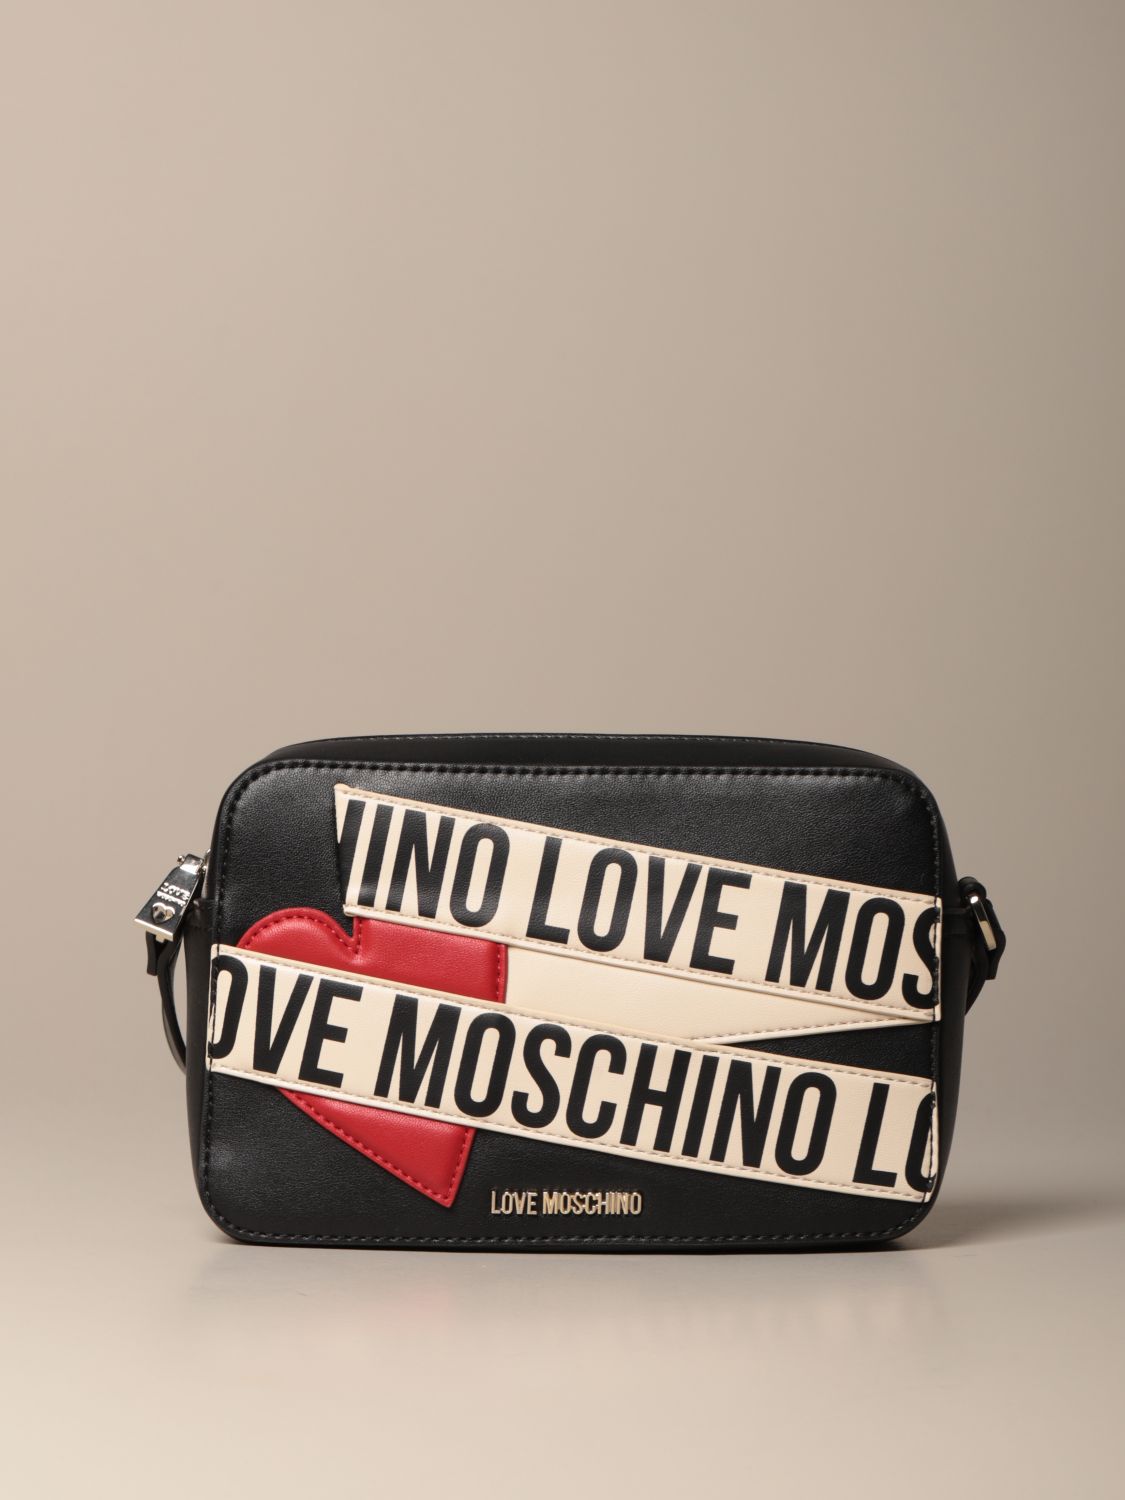 Bandolera Love Moschino Top Sellers, 59% OFF | www.ingeniovirtual.com